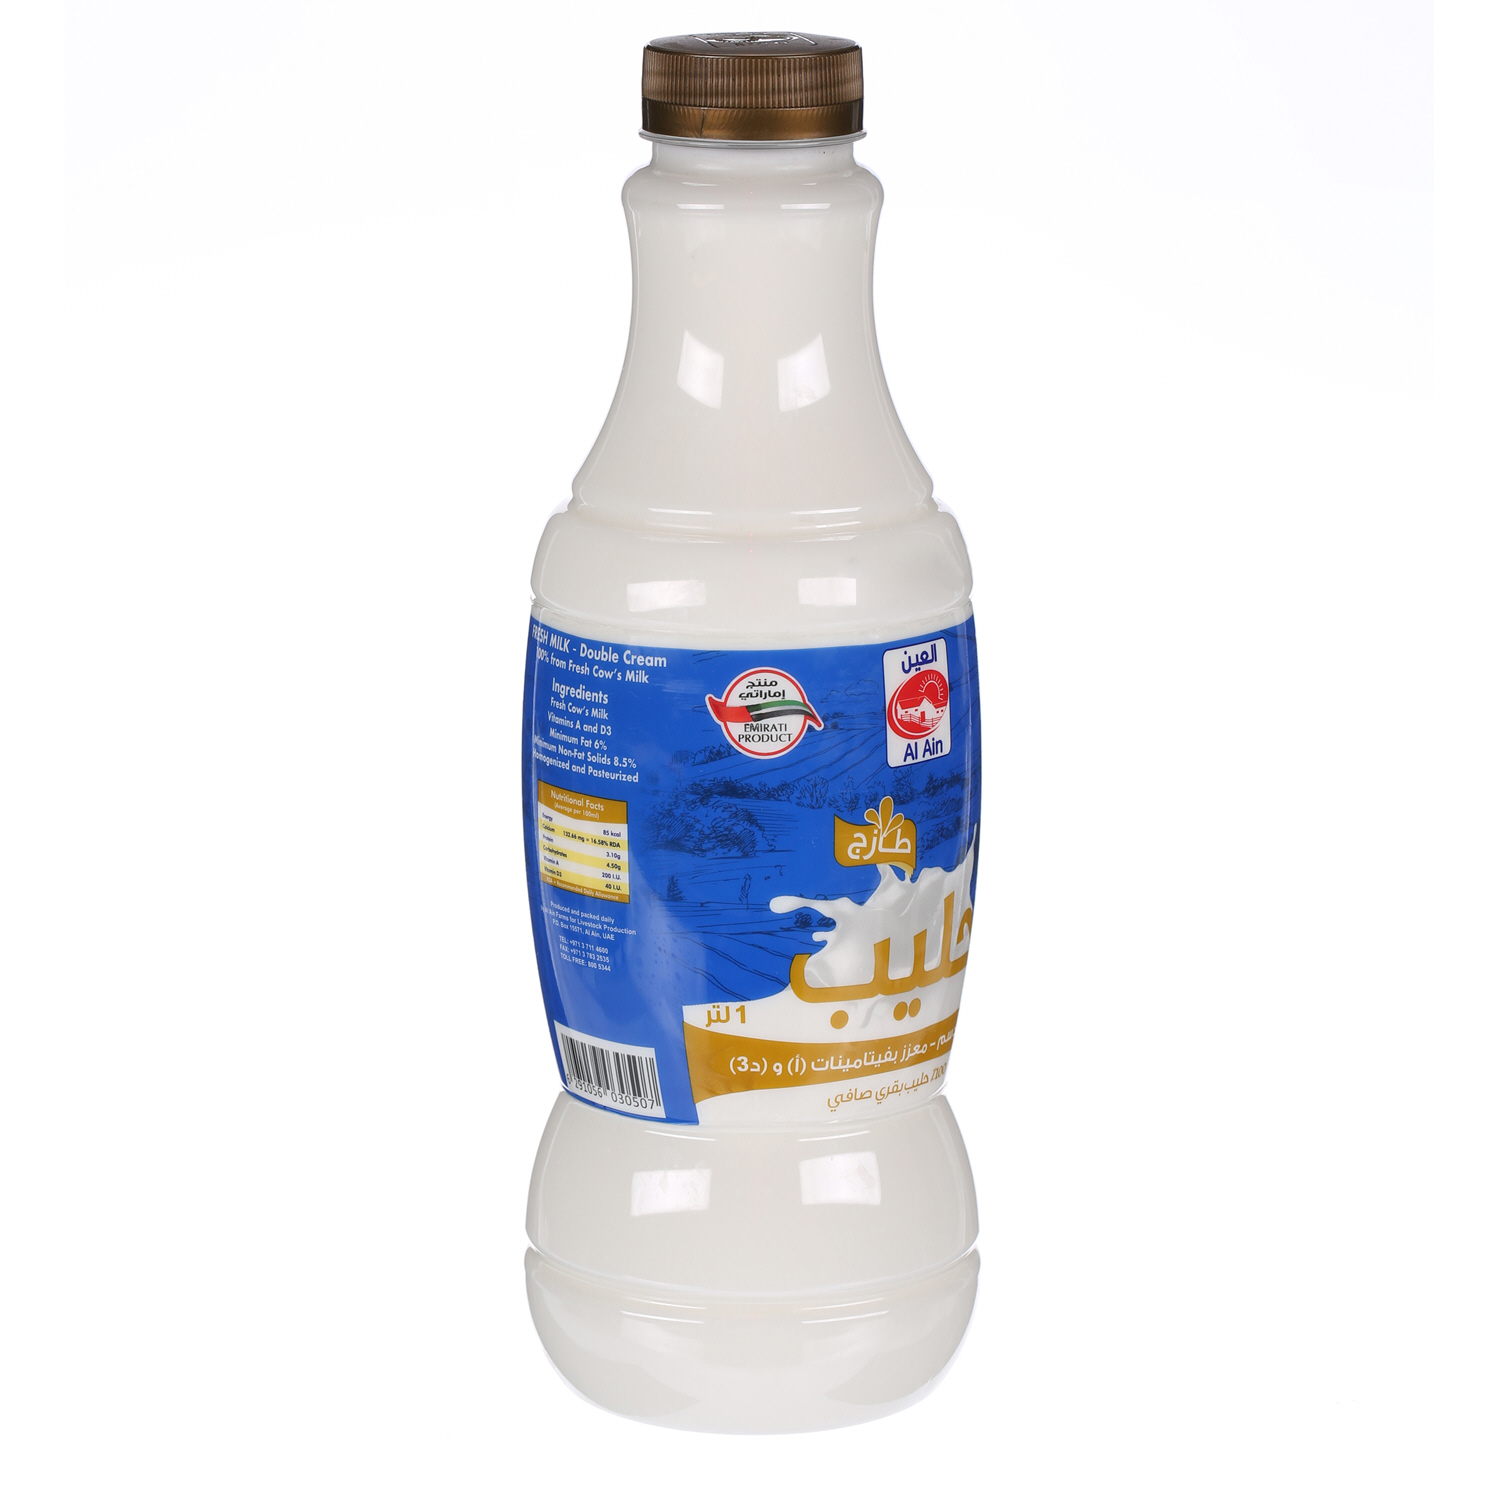 Al Ain Fresh Milk Double Cream 1 L